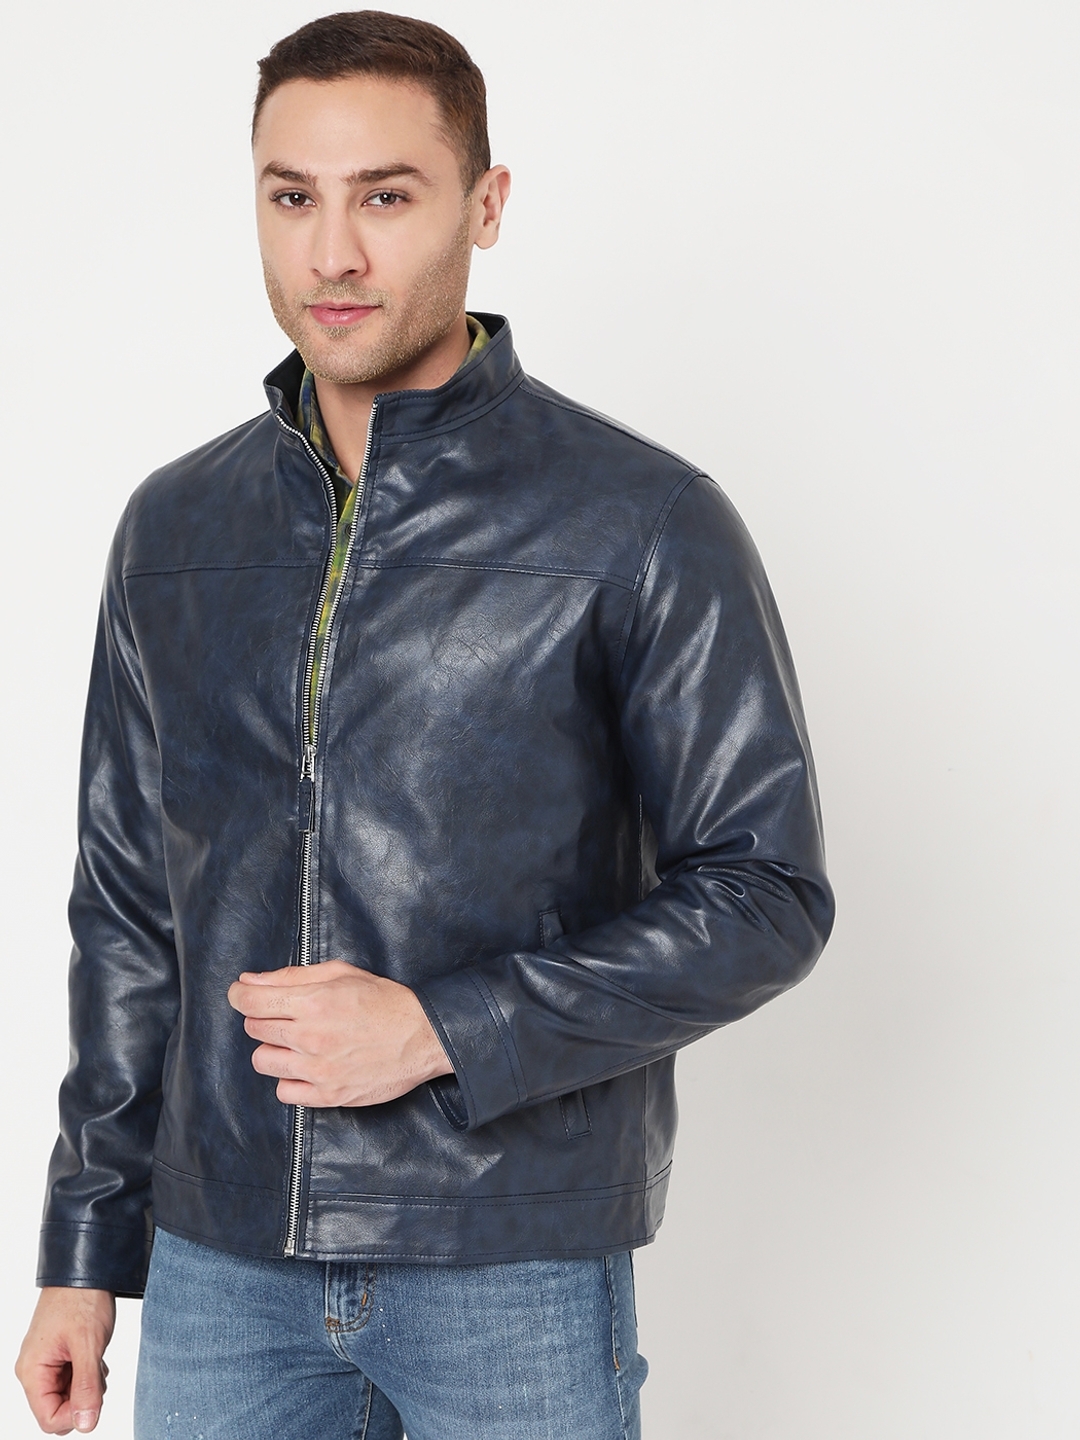 170 Best Denim Jackets for Men ideas  mens outfits jackets fashion